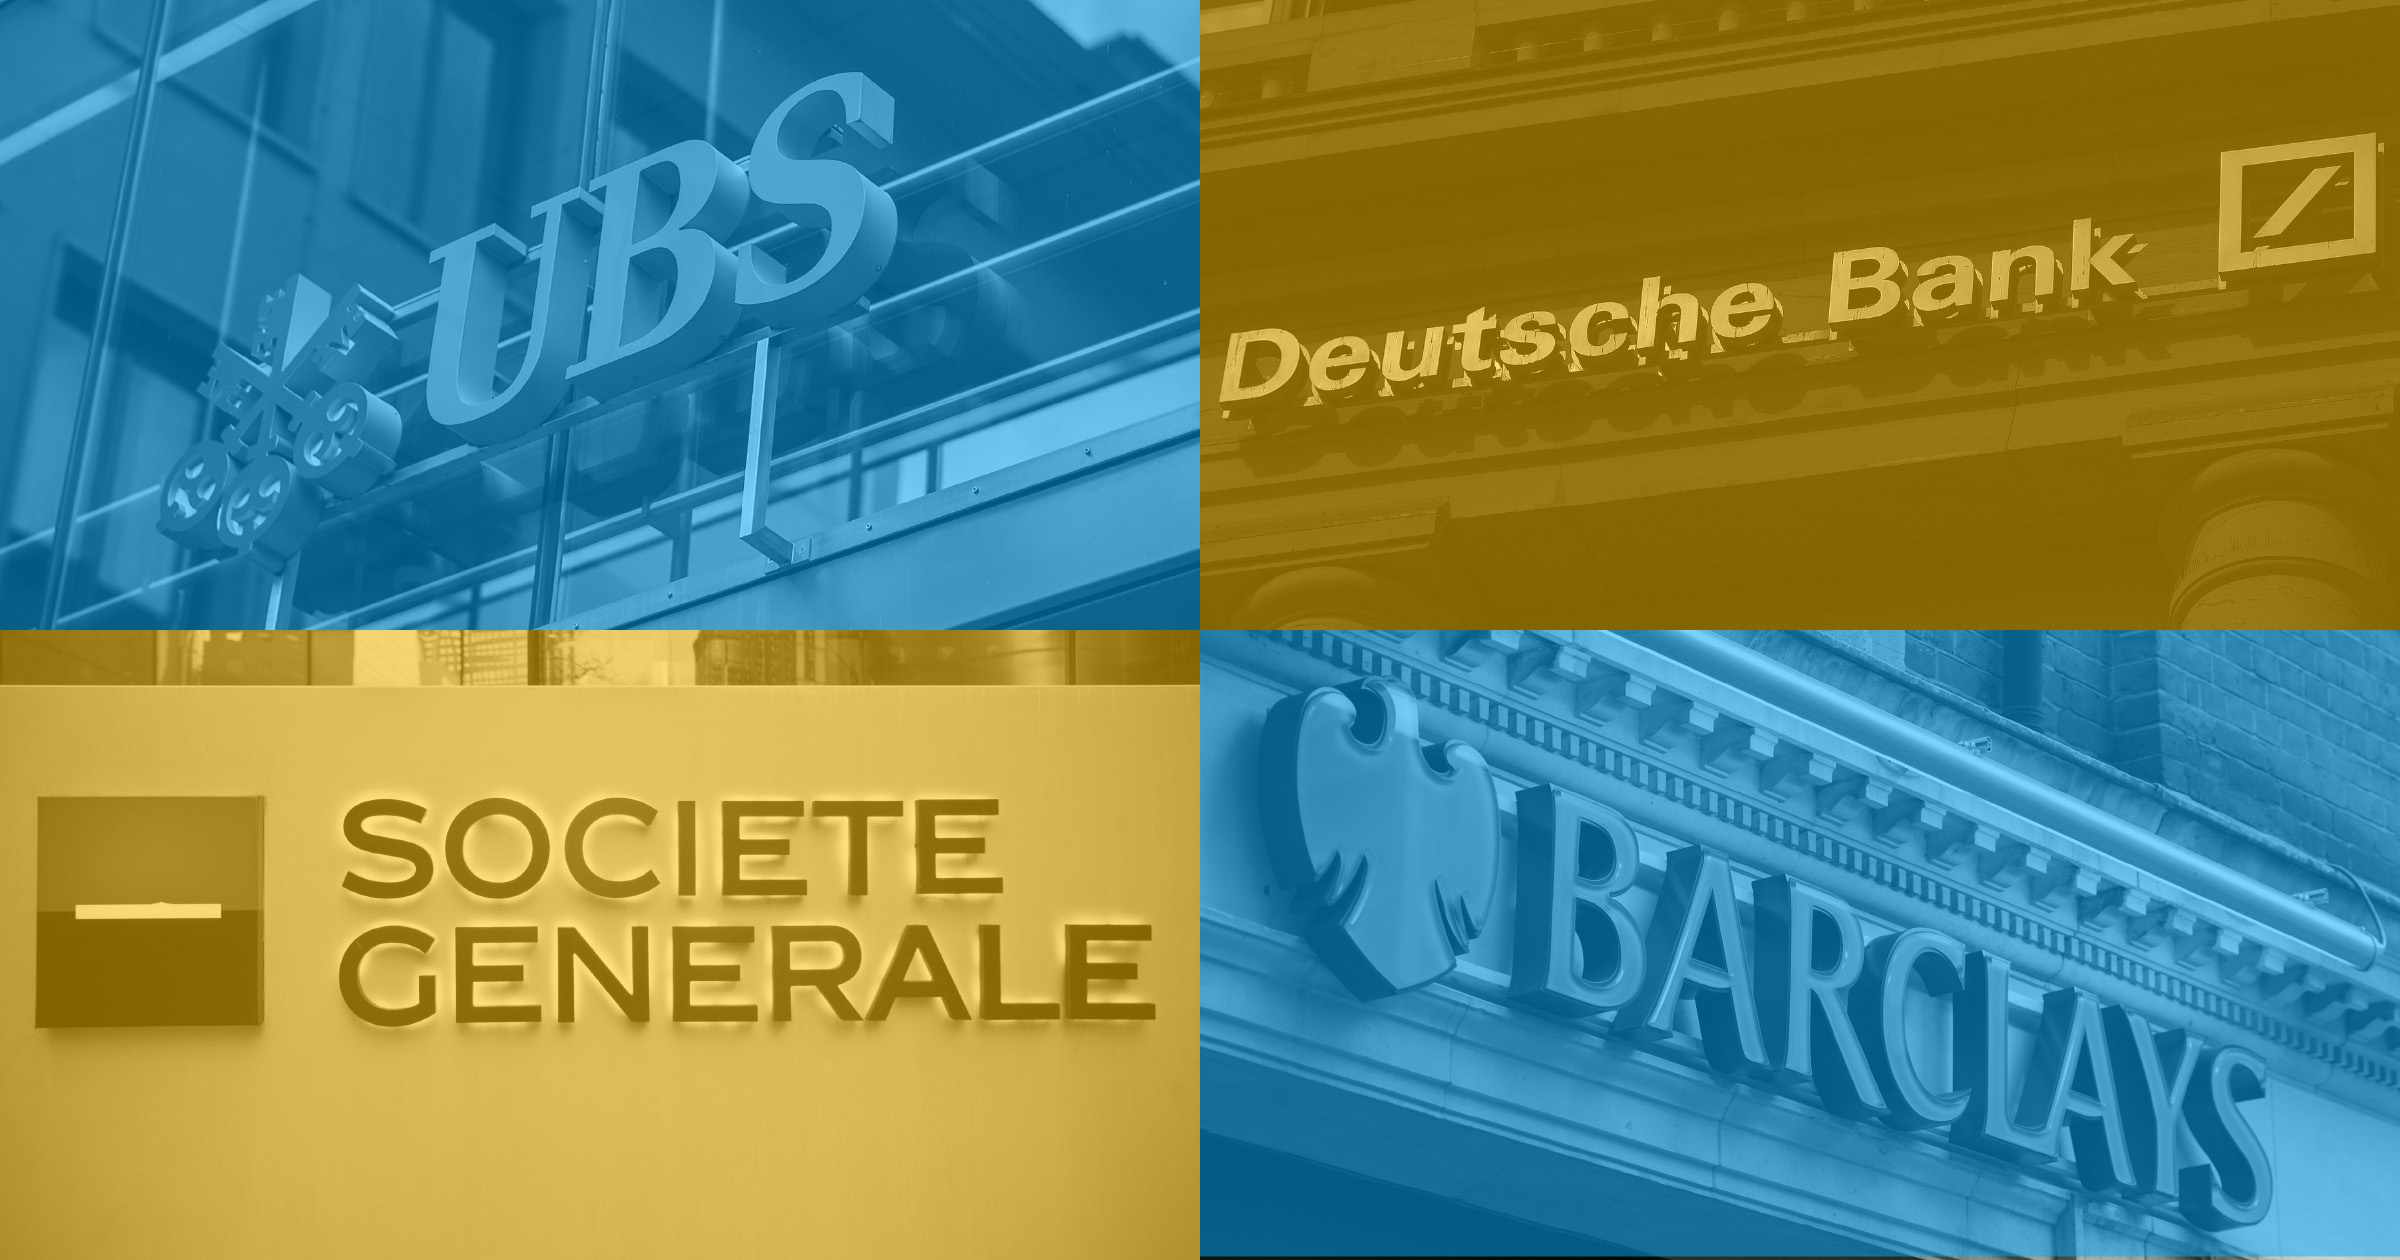 europe banks mergers embattled malaise